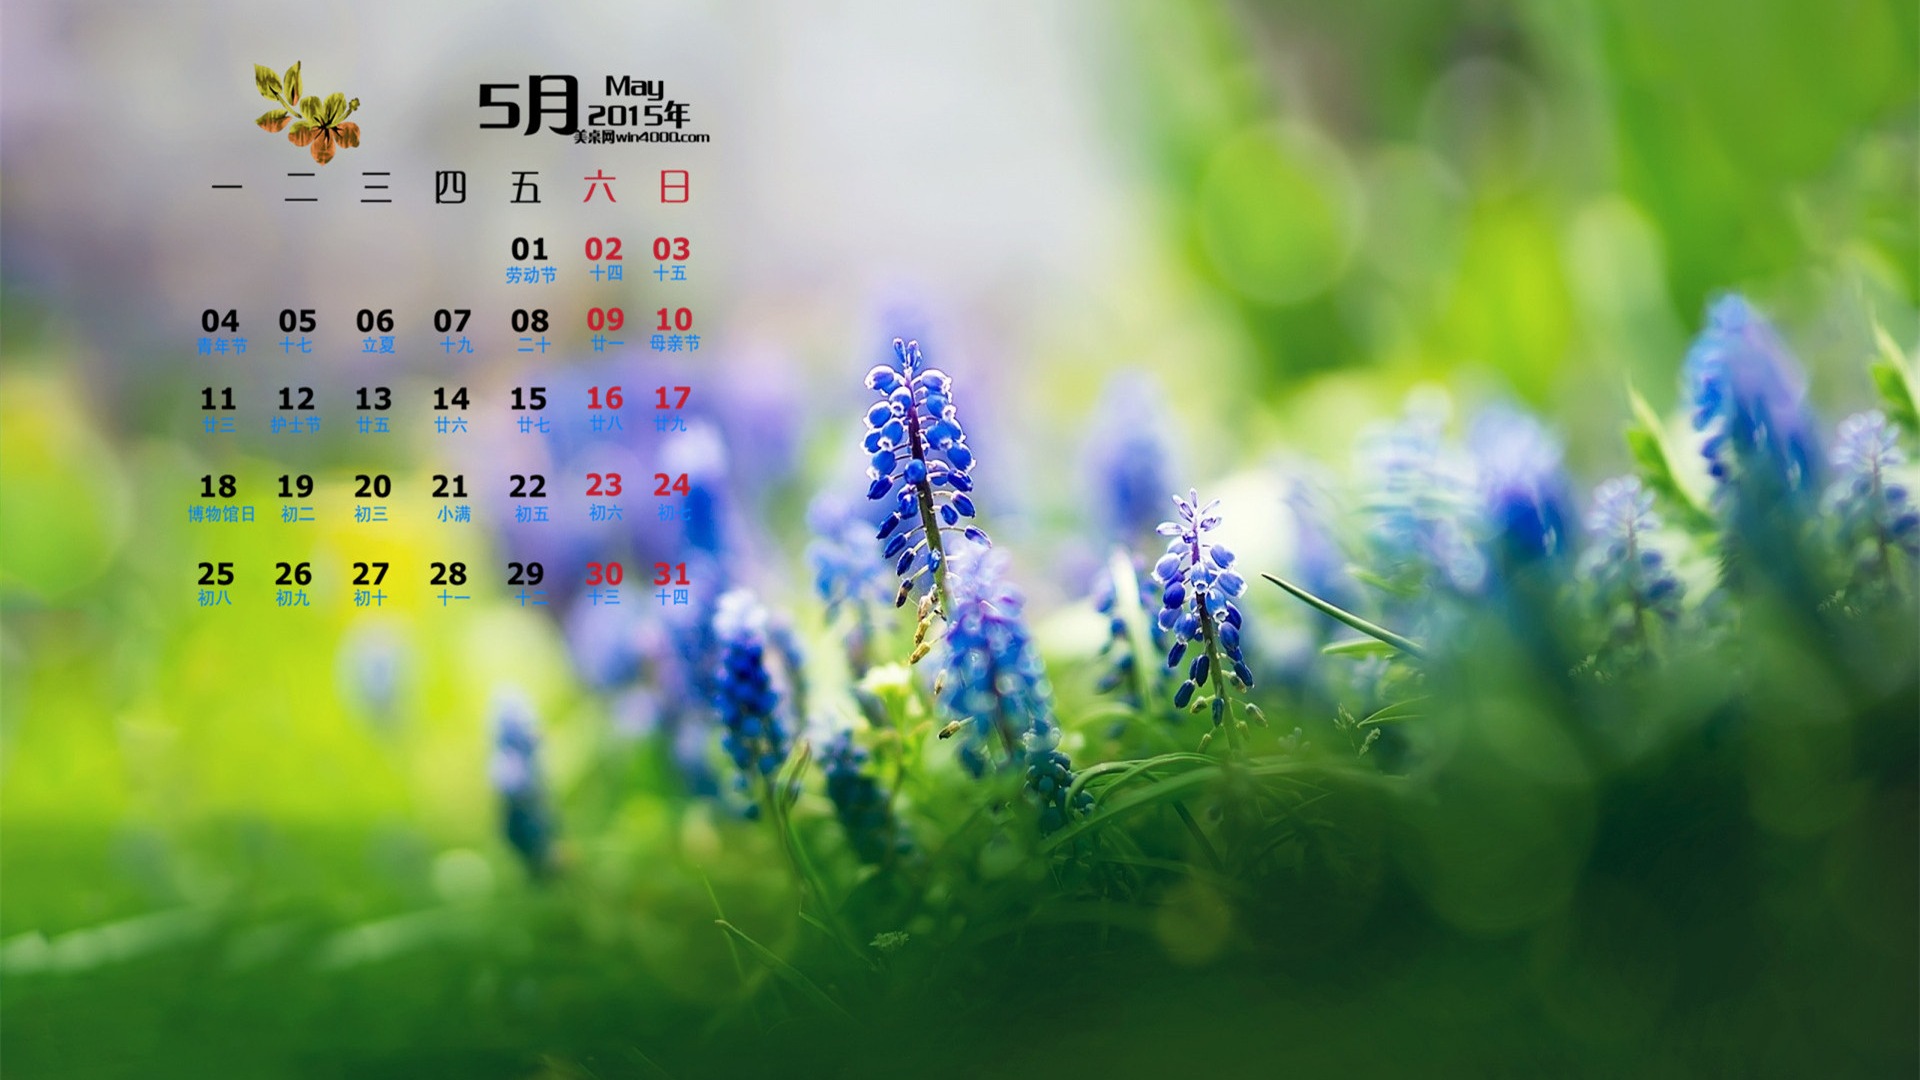 Mai 2015 calendar fond d'écran (1) #16 - 1920x1080